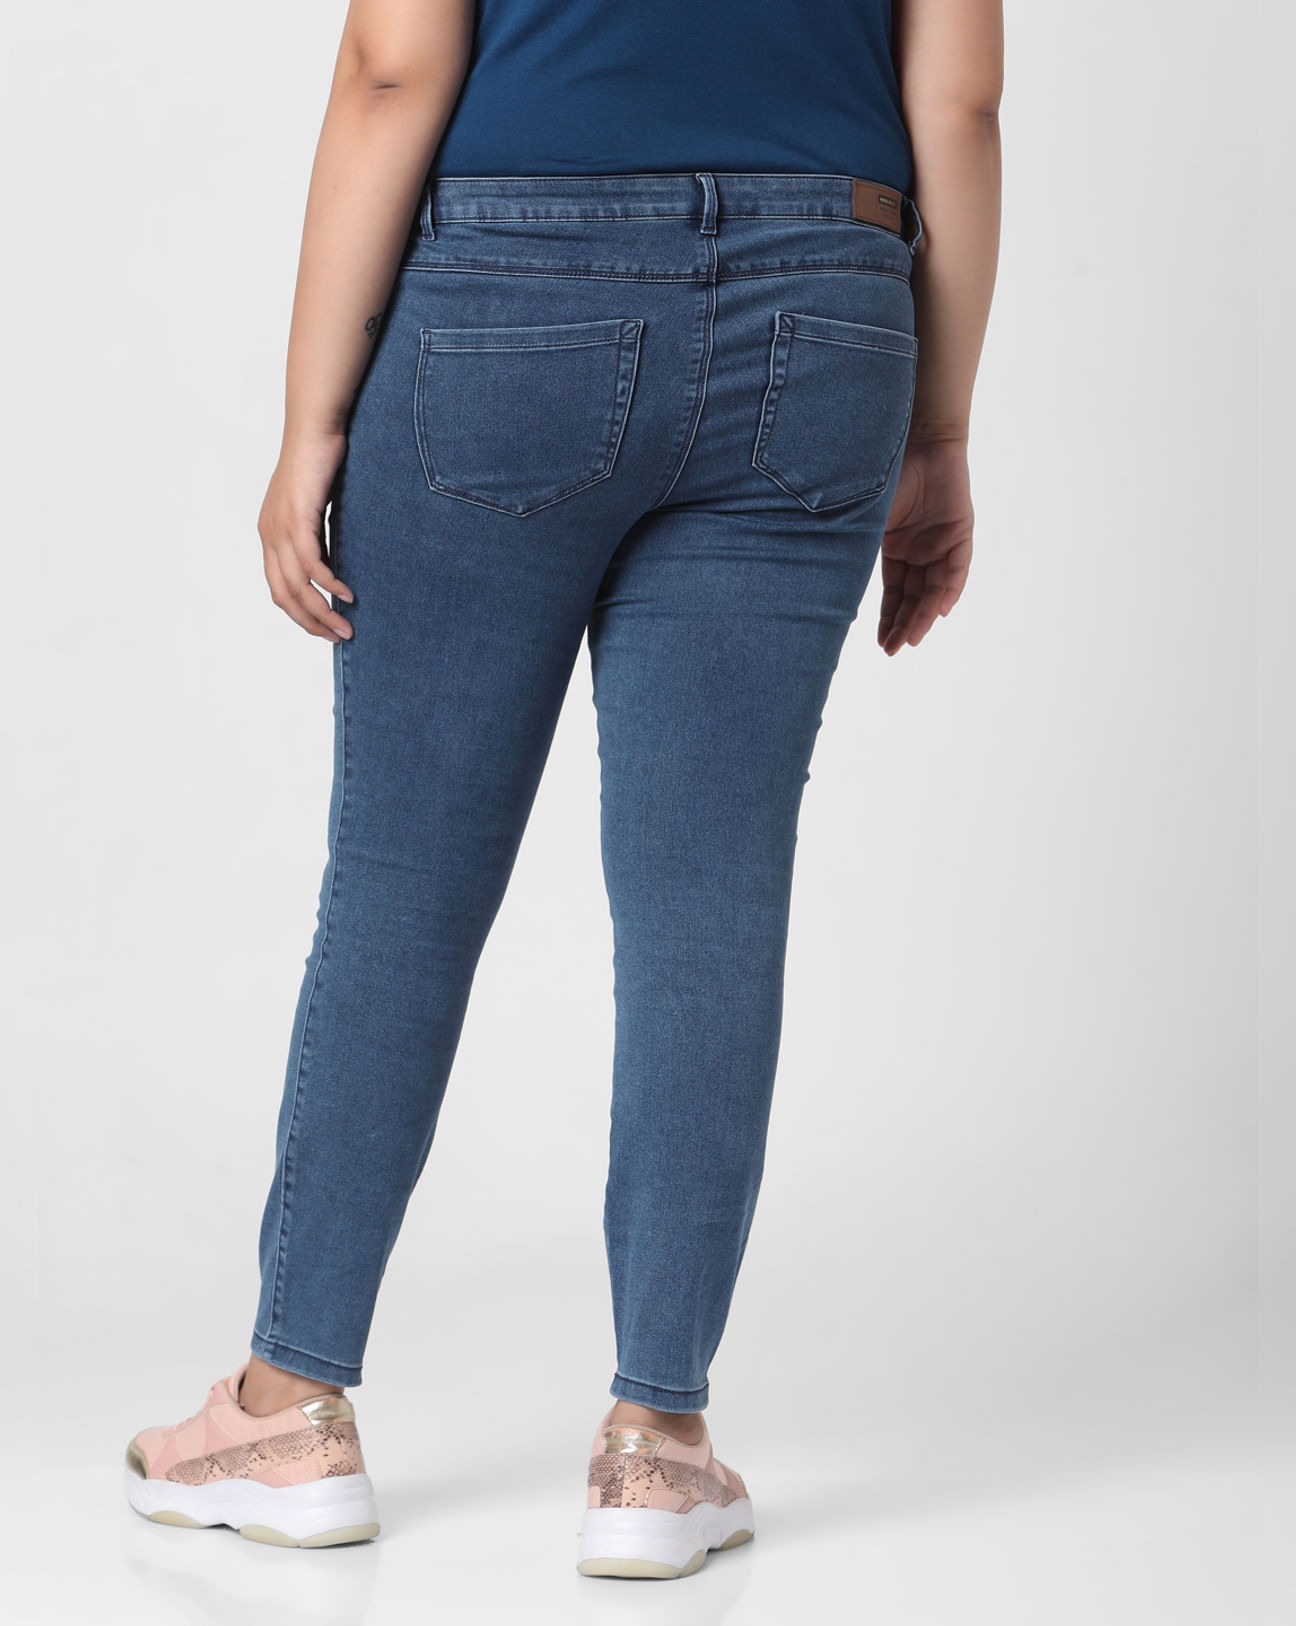 Buy Women Blue Mid Rise Skinny Jeans online